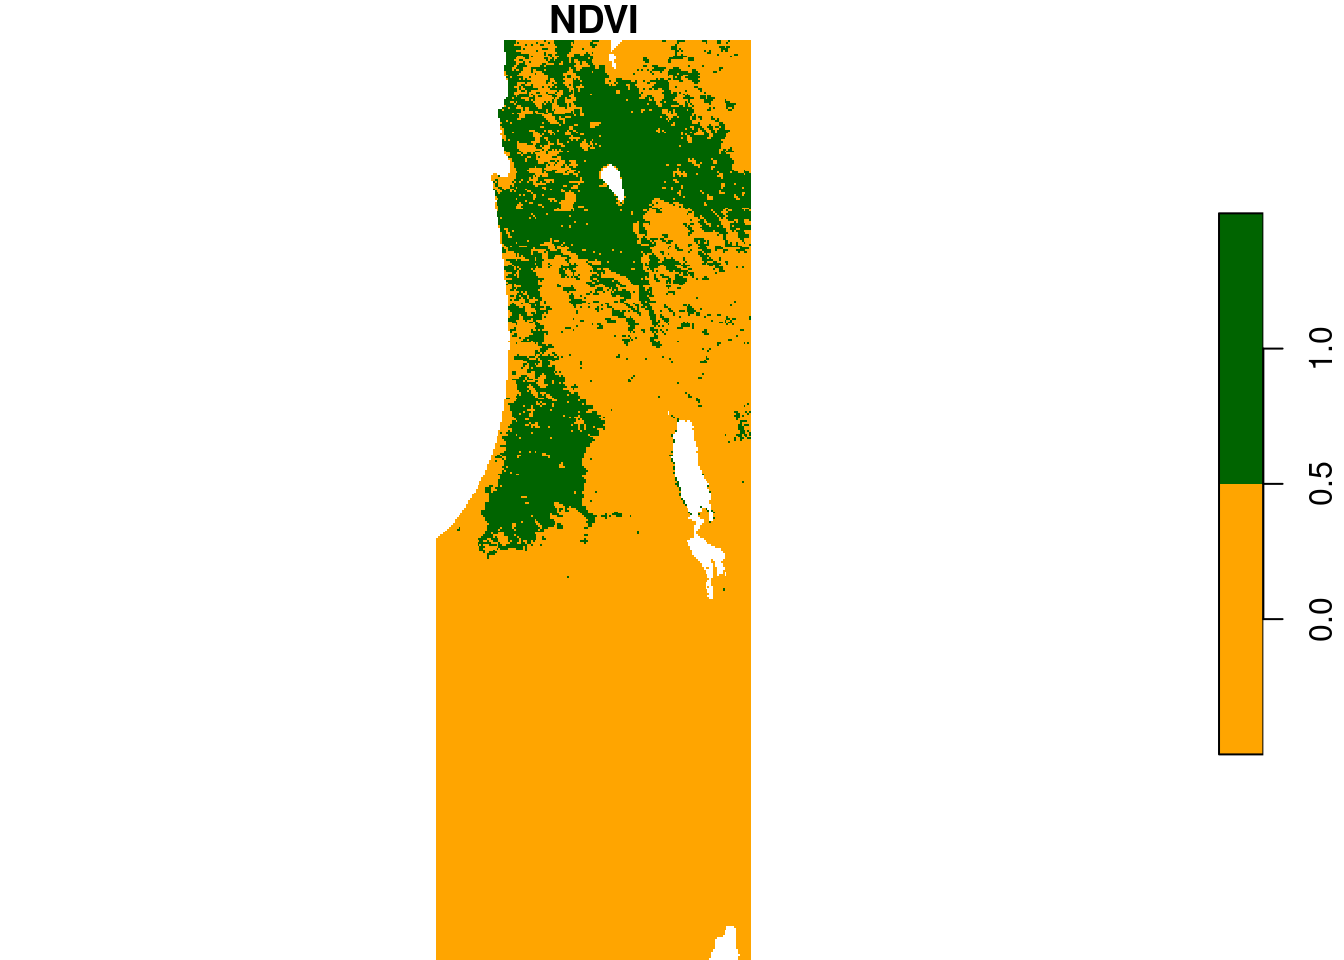 $NDVI_{max}≥0.6$ (green) and $NDVI_{max}<0.6$ (orange)